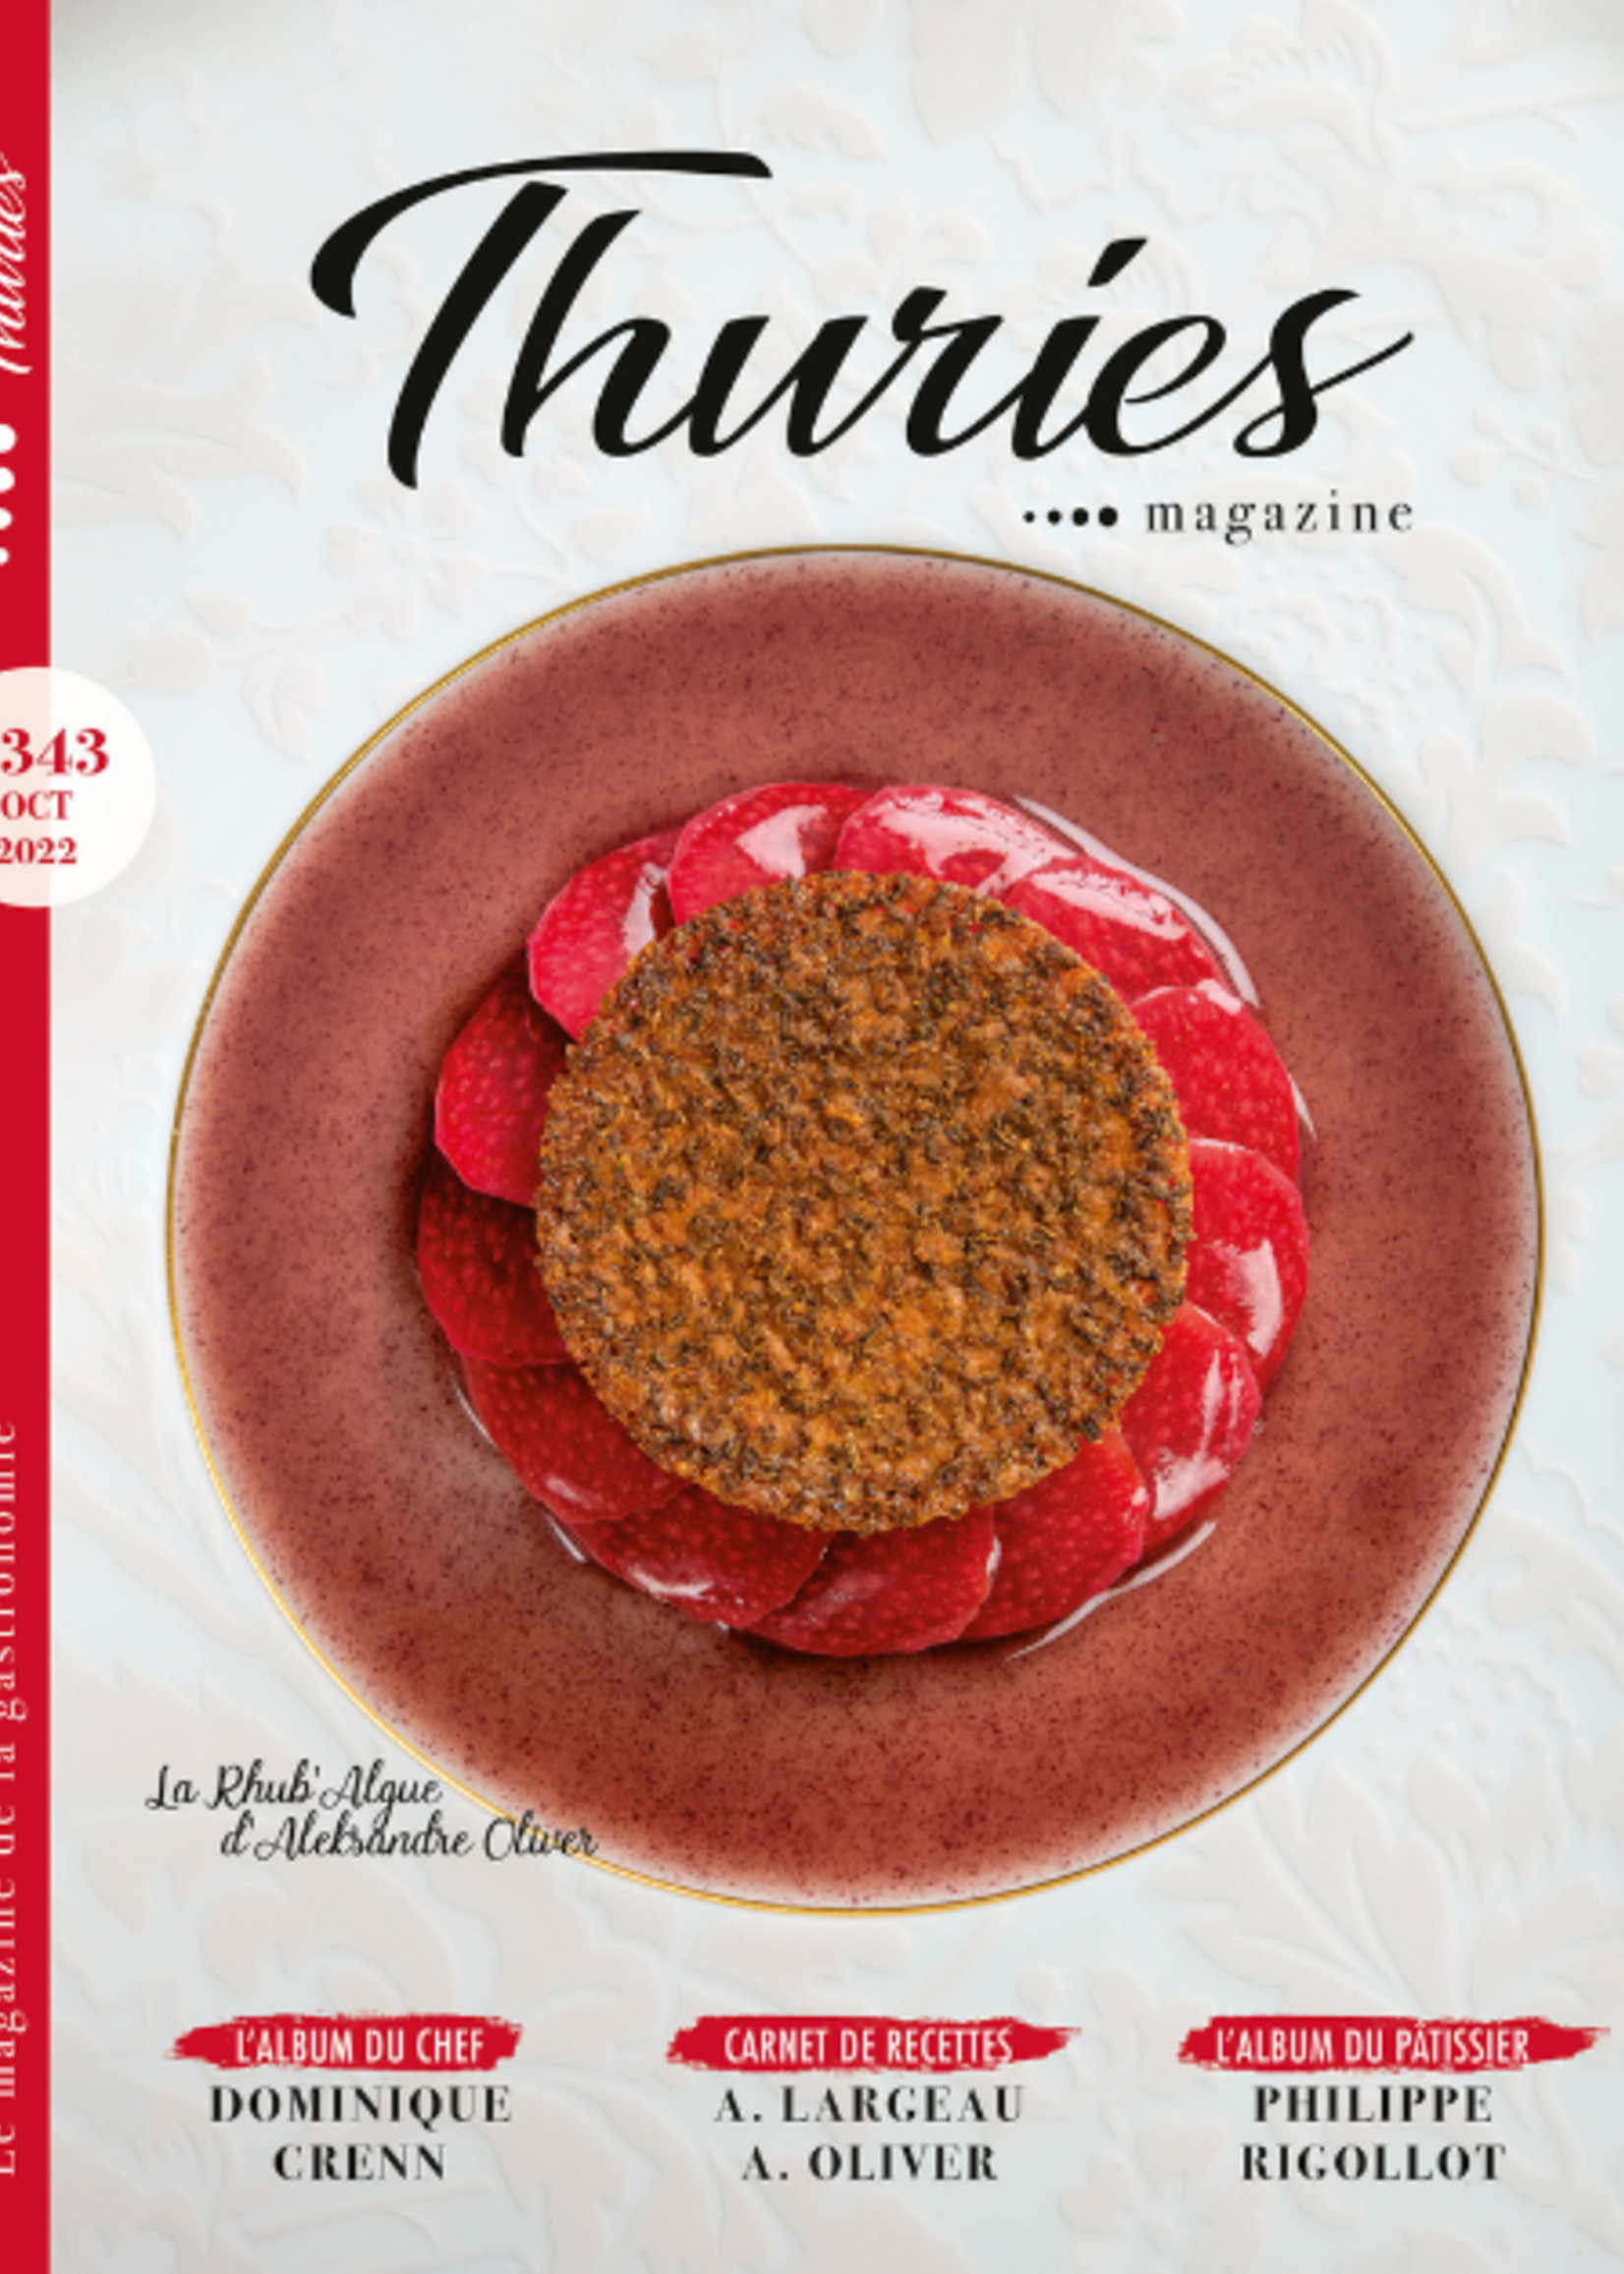 Thuries magazine #343 oct 2022